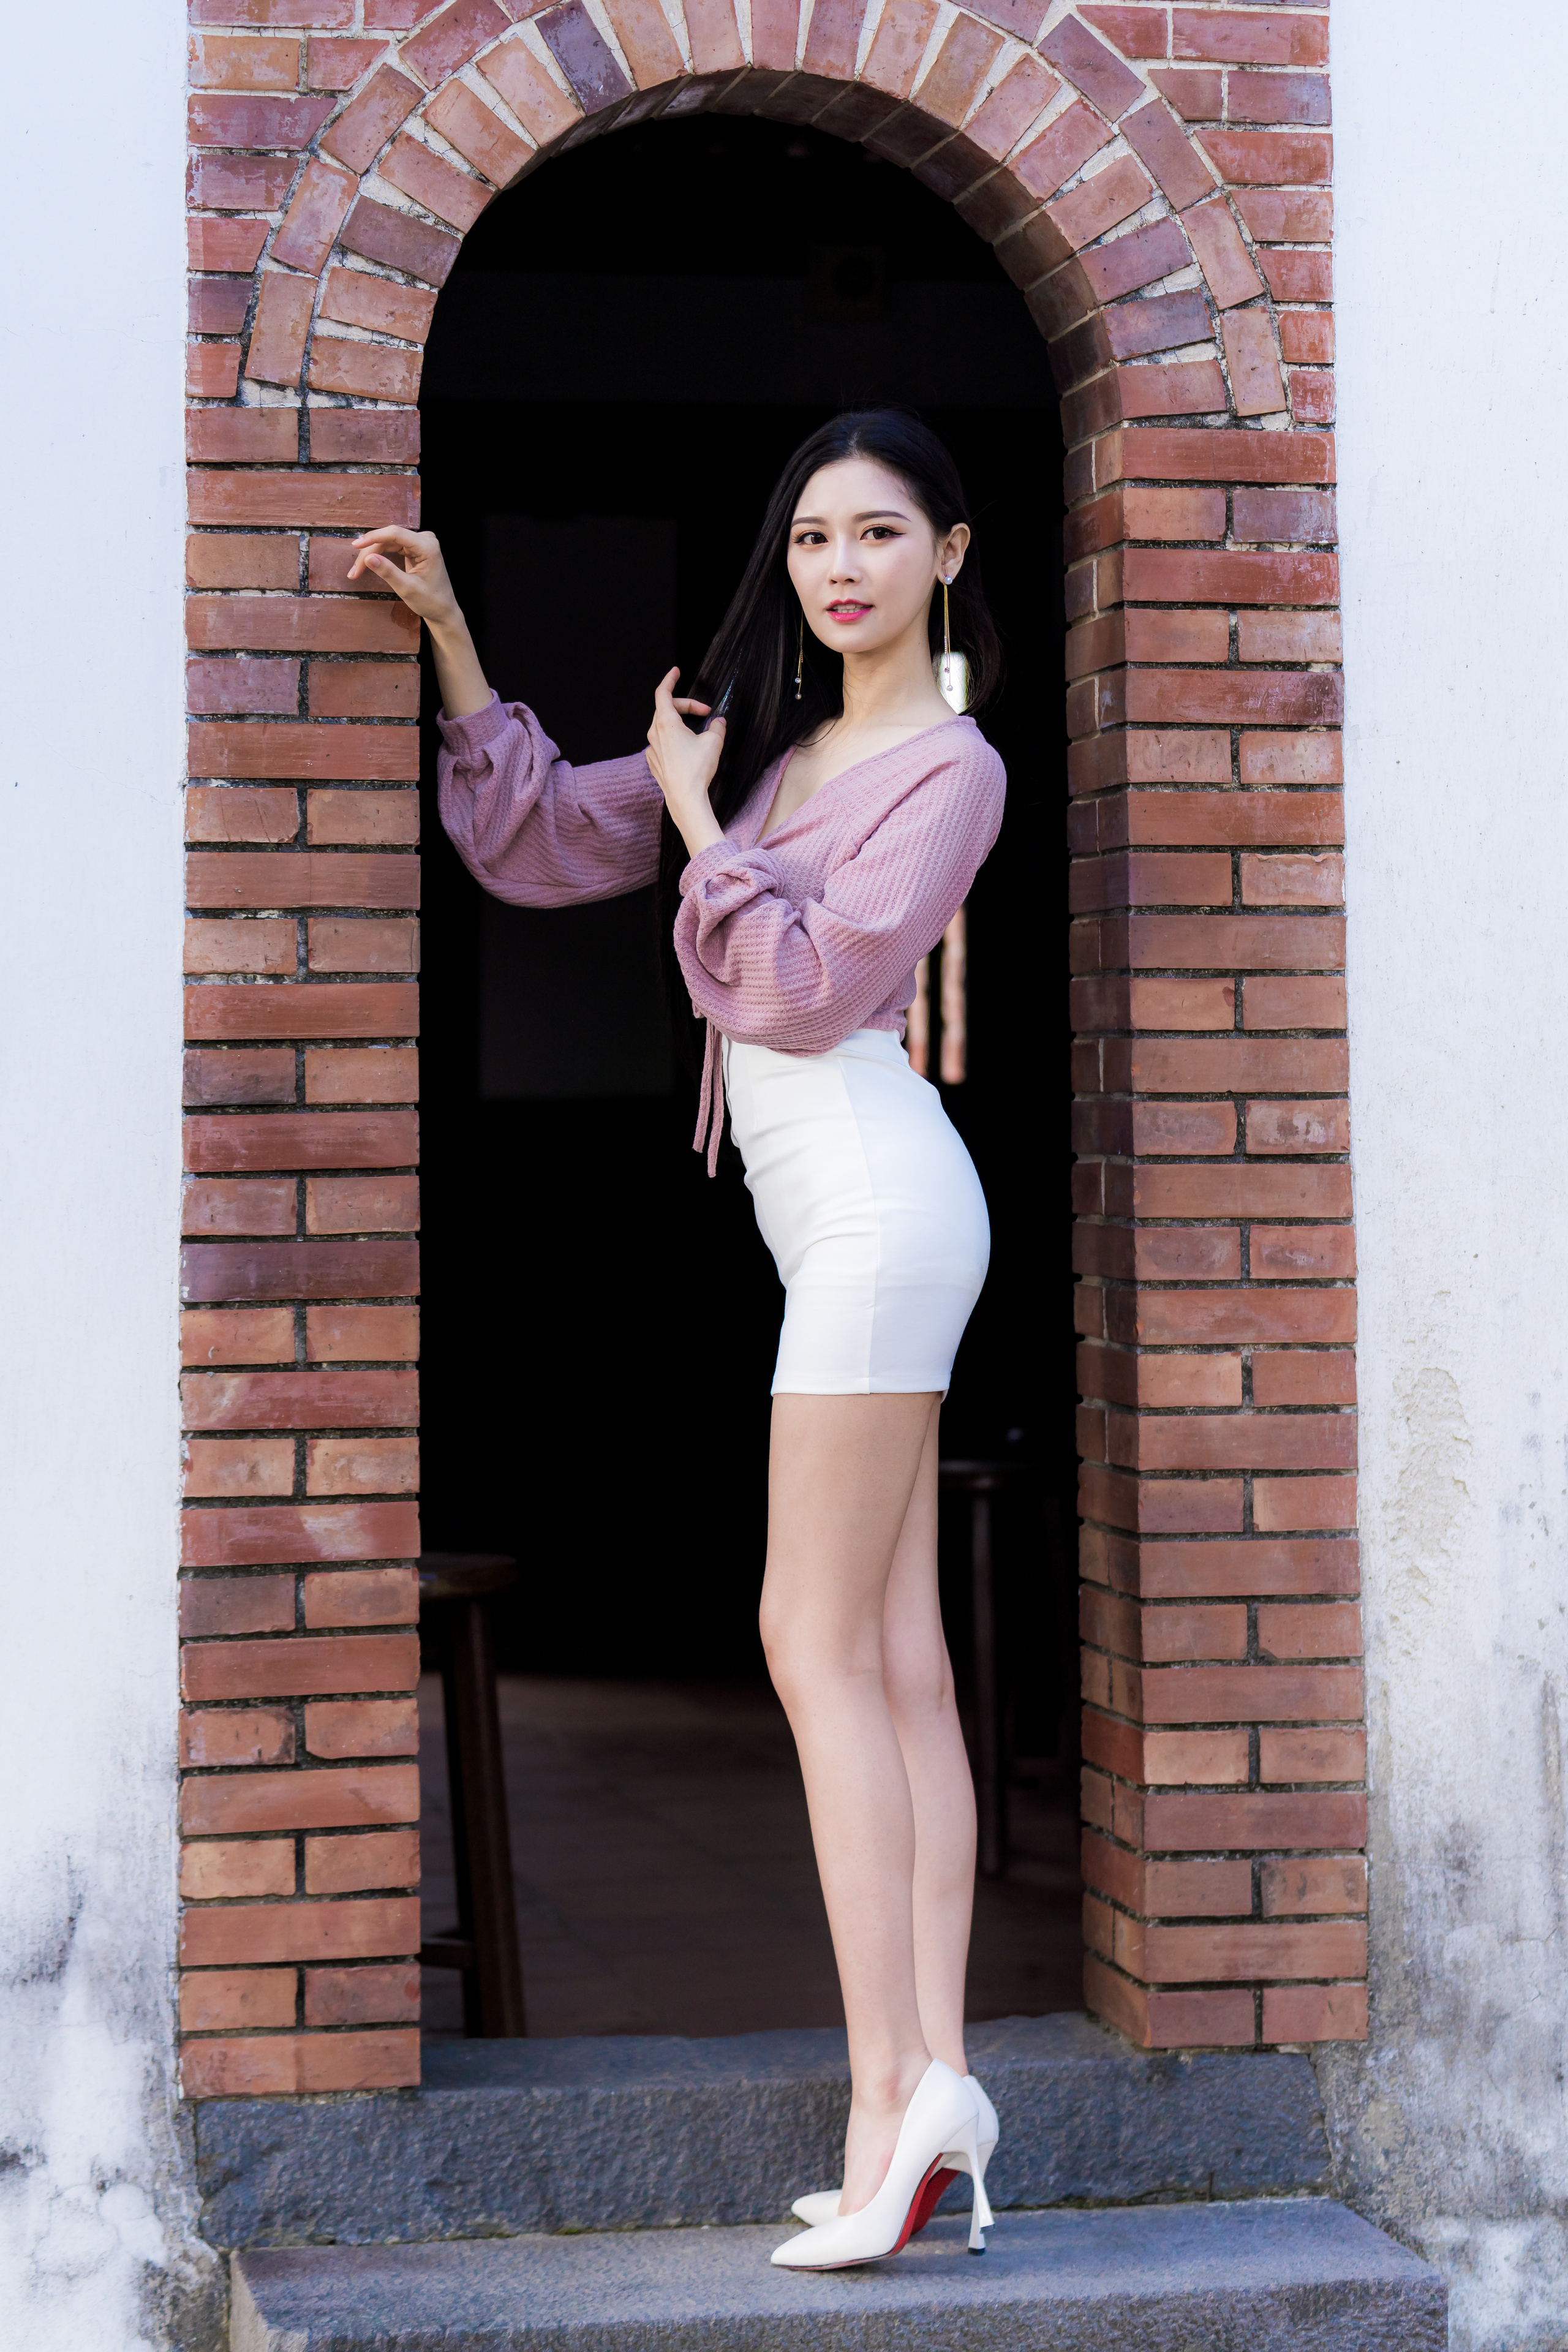 Asian Model Women Long Hair Dark Hair Blouse White Skirt White Heels Doorways Bricks Earrings Stairs 2560x3840